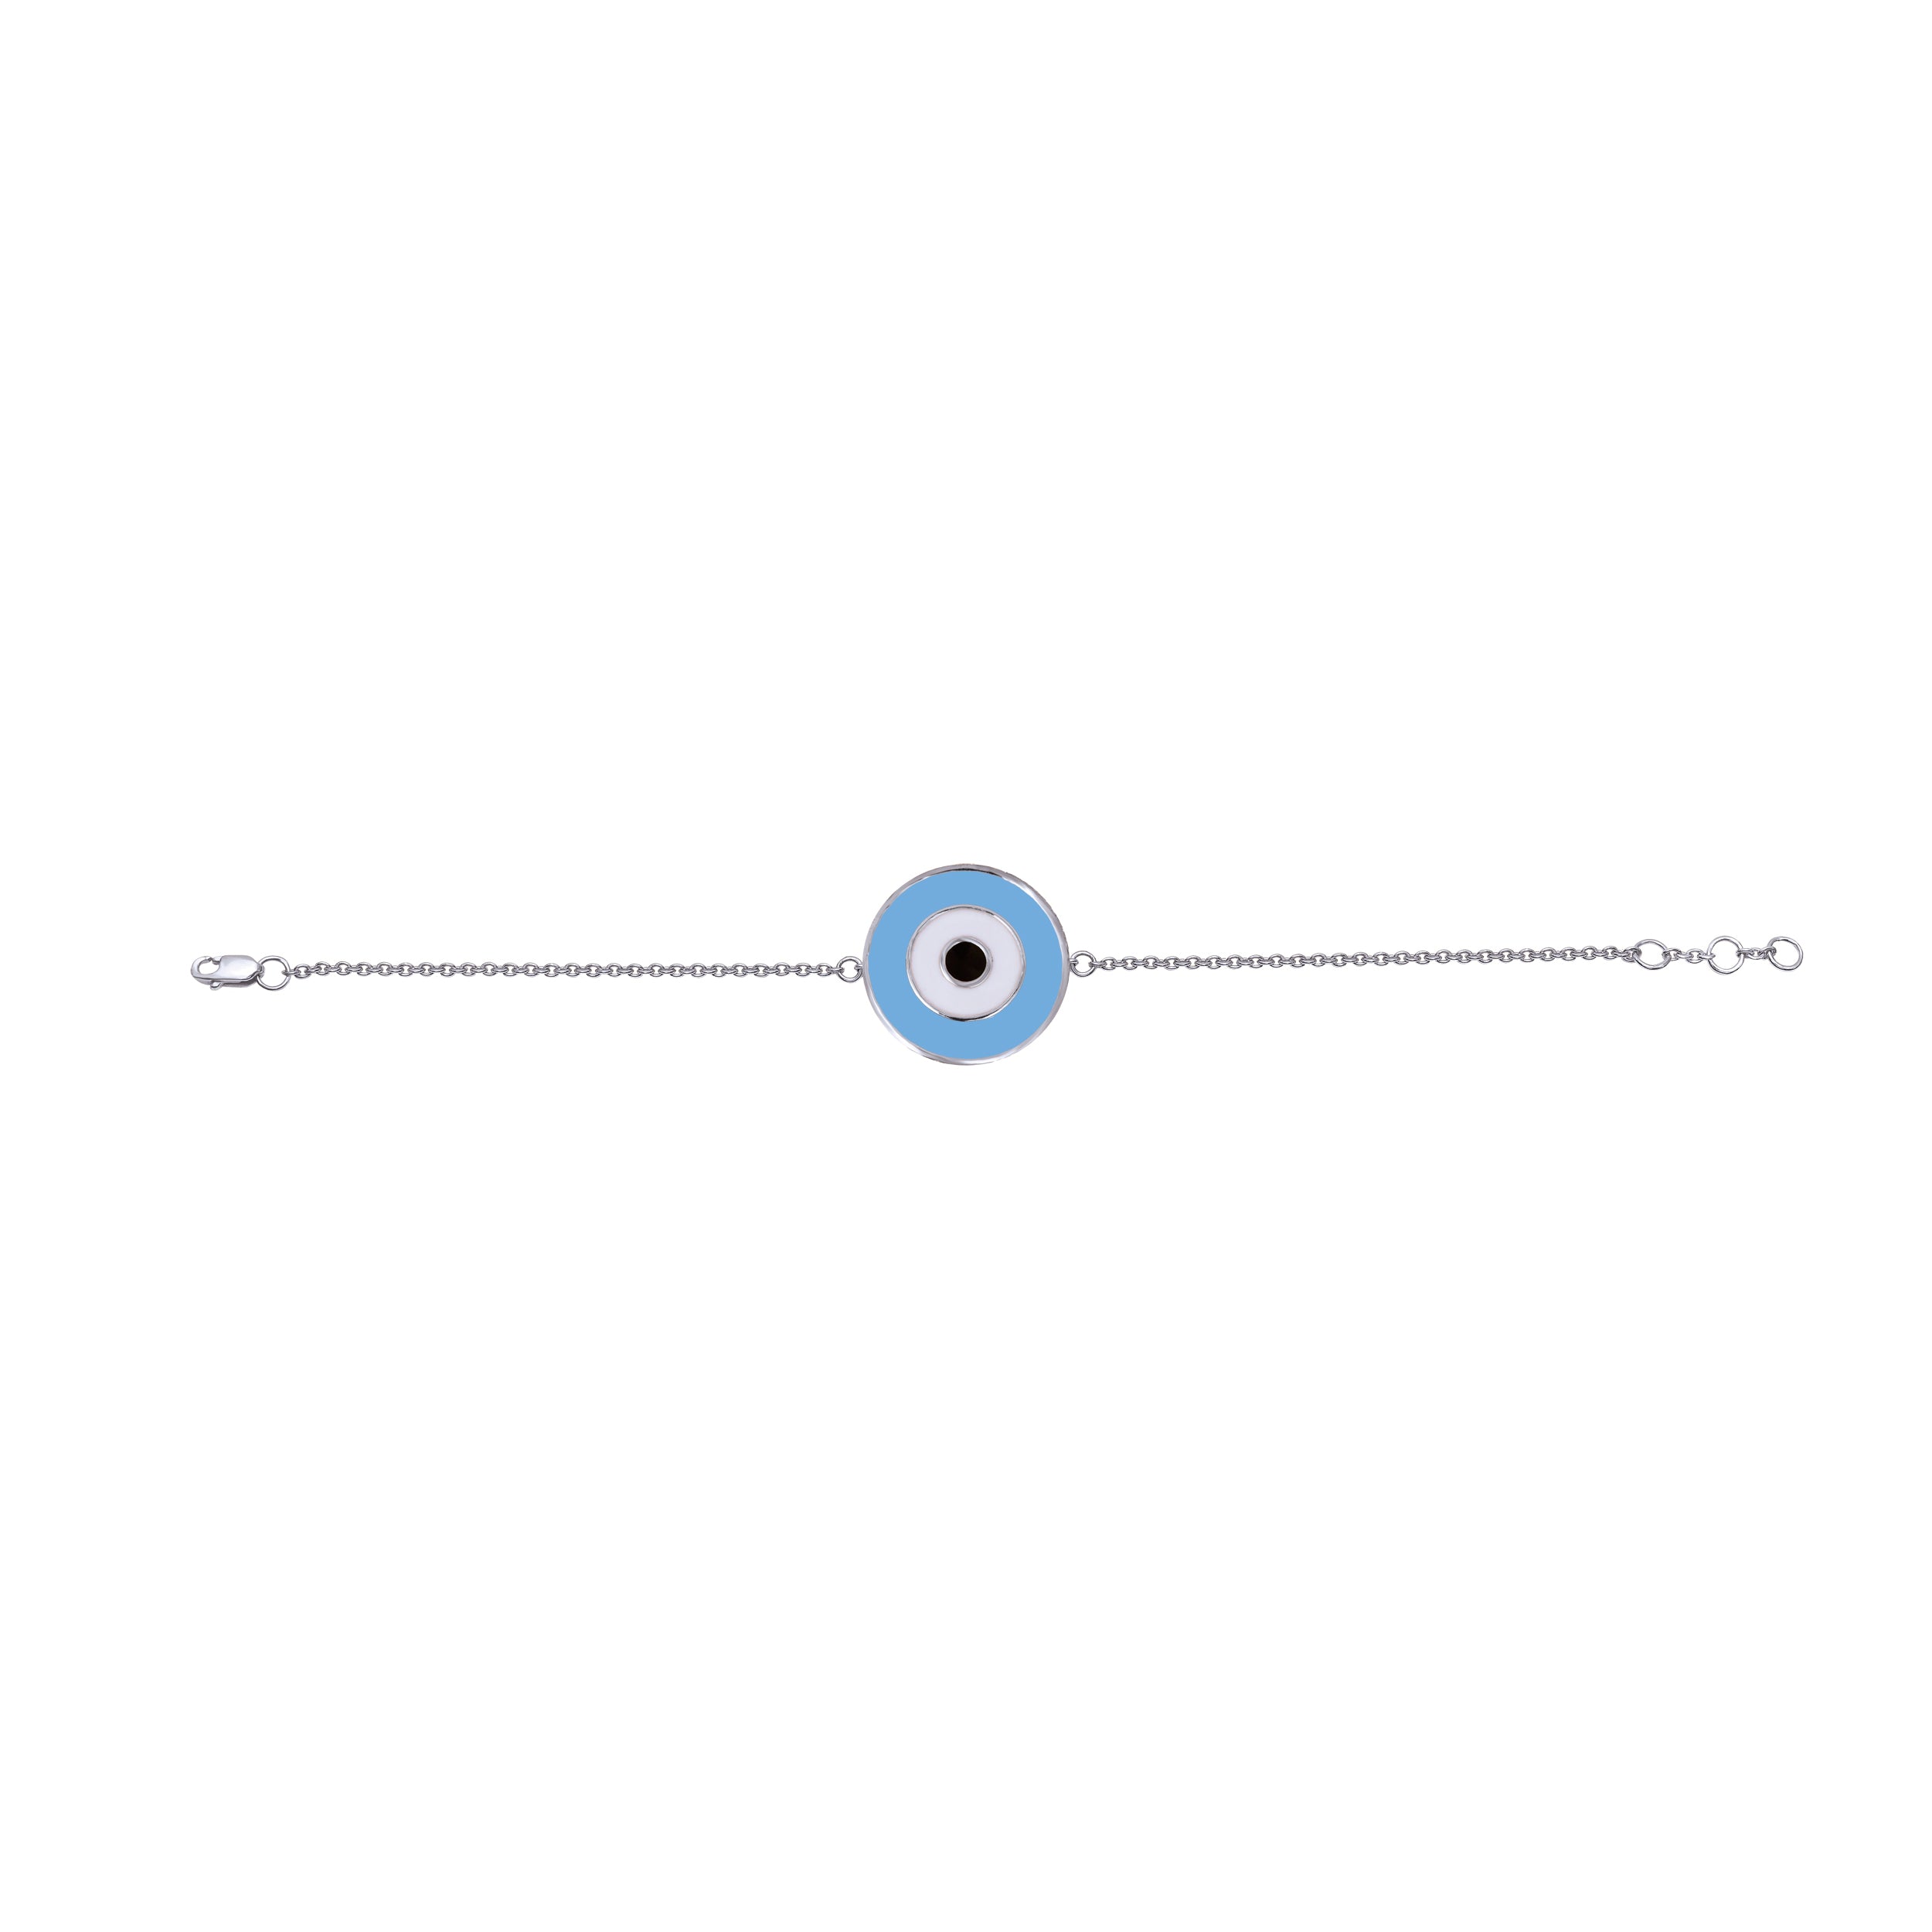 Round Blue Enamel Evil Eye Chain Bracelet